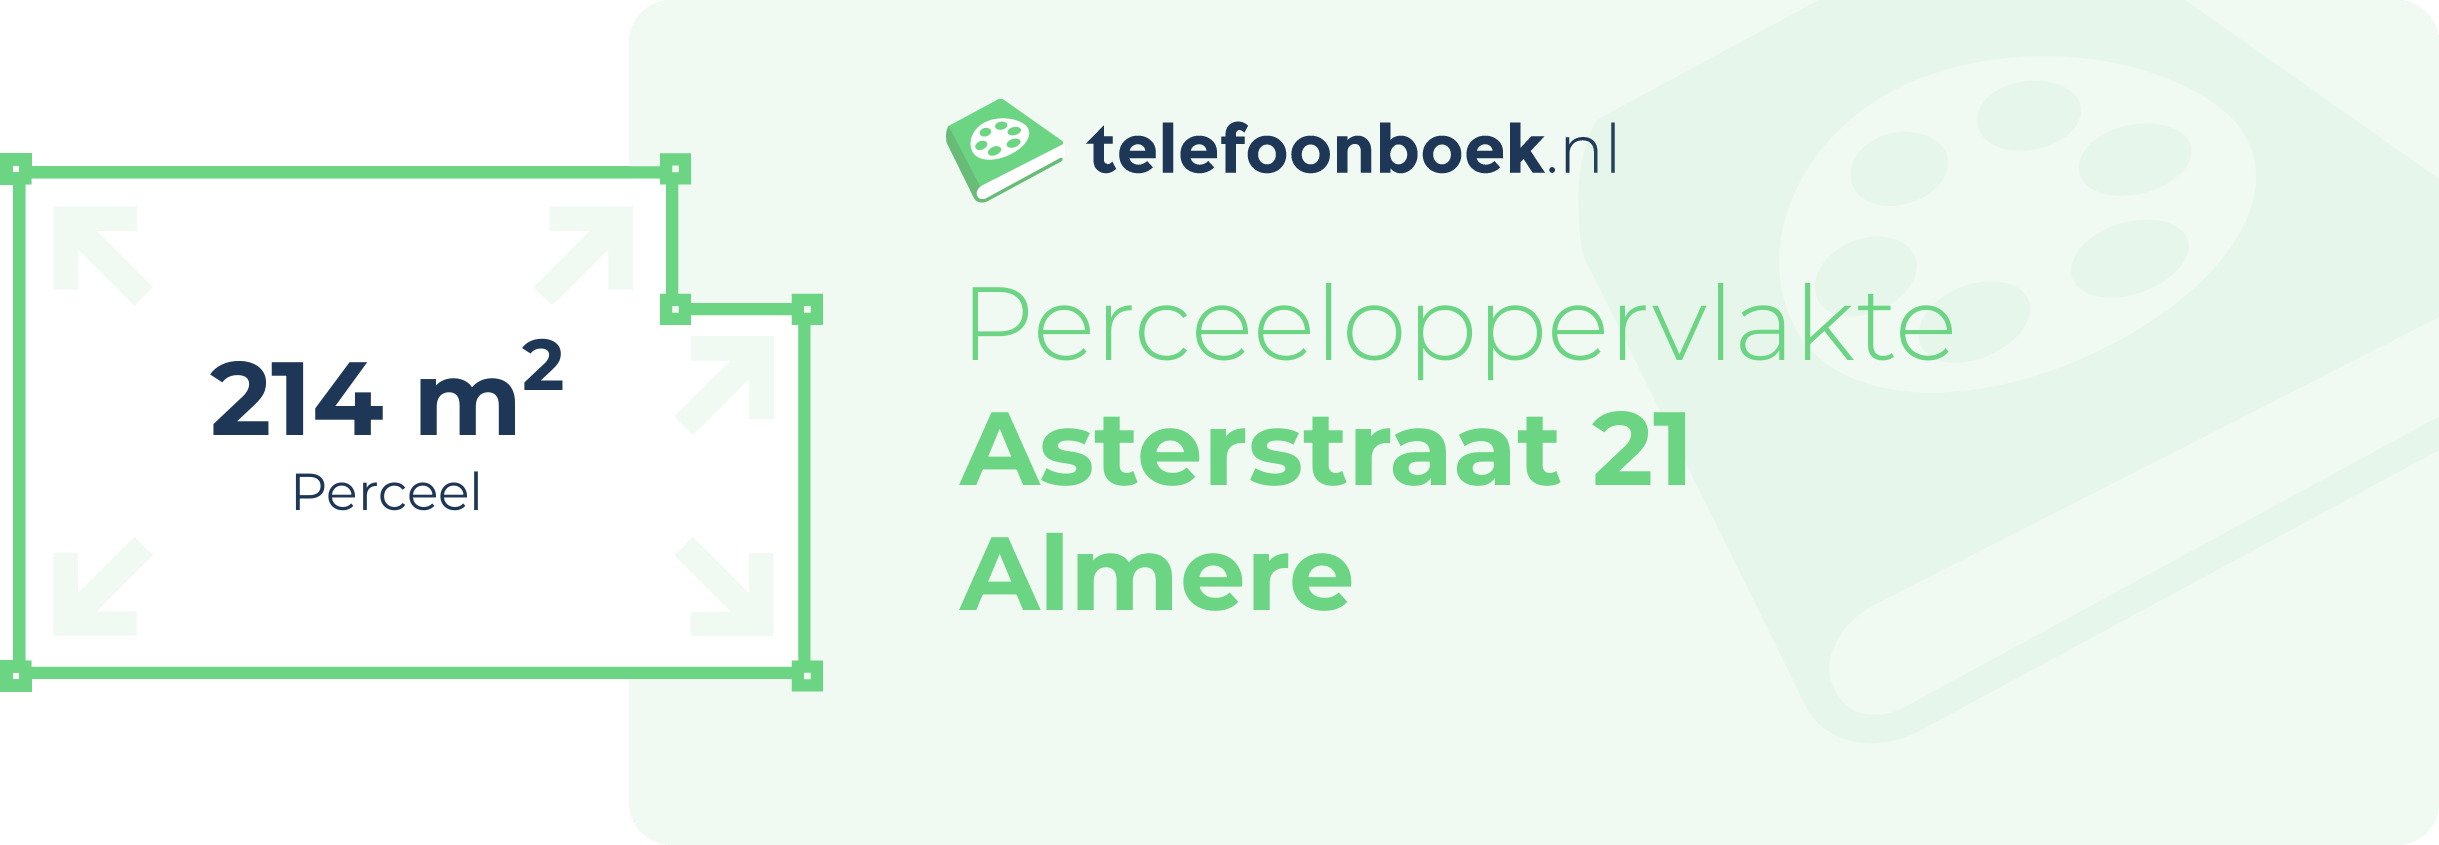 Perceeloppervlakte Asterstraat 21 Almere